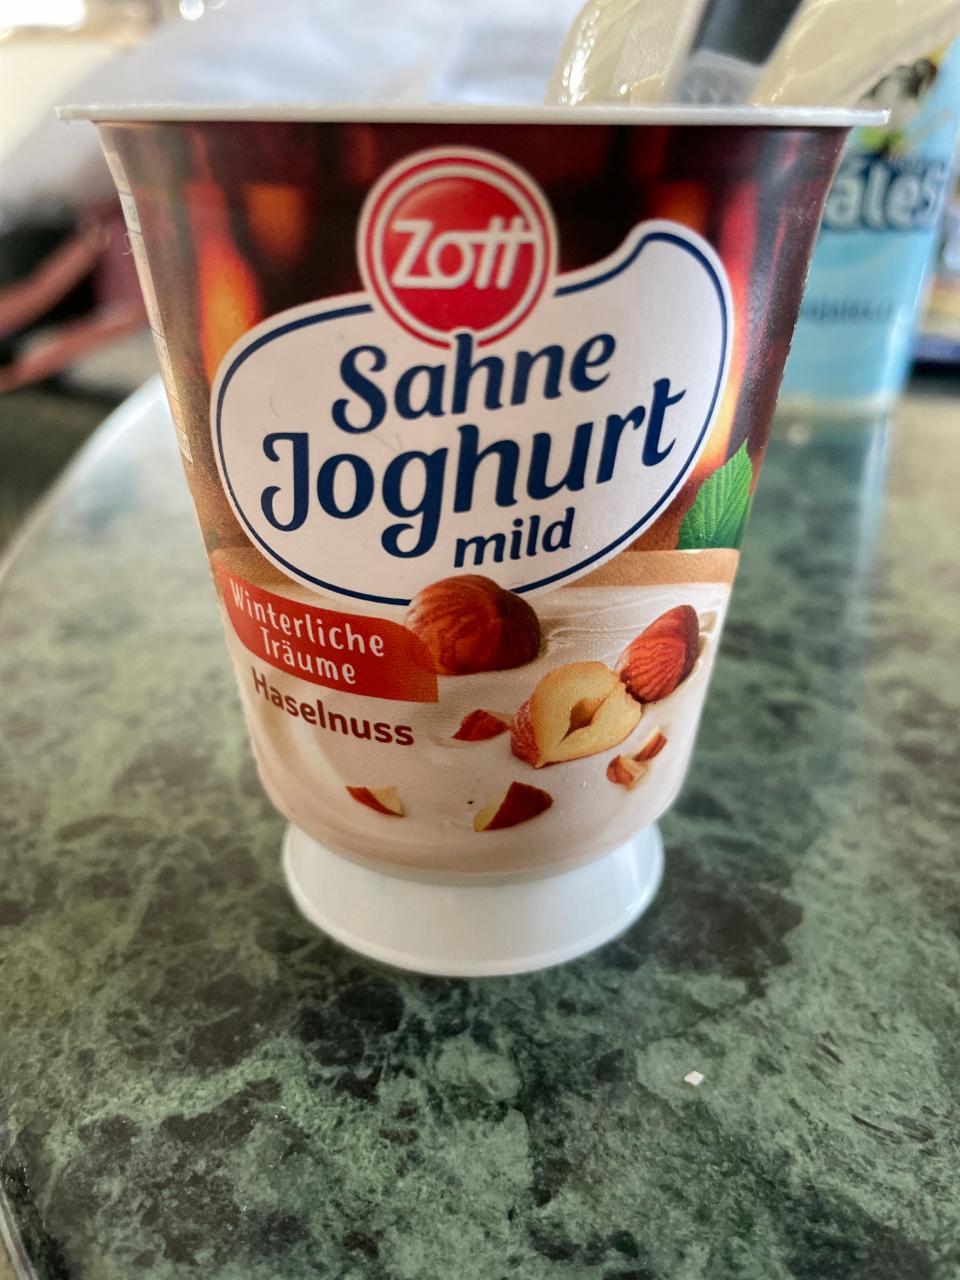 Fotografie - Sahne Joghurt mild Haselnuss Zott